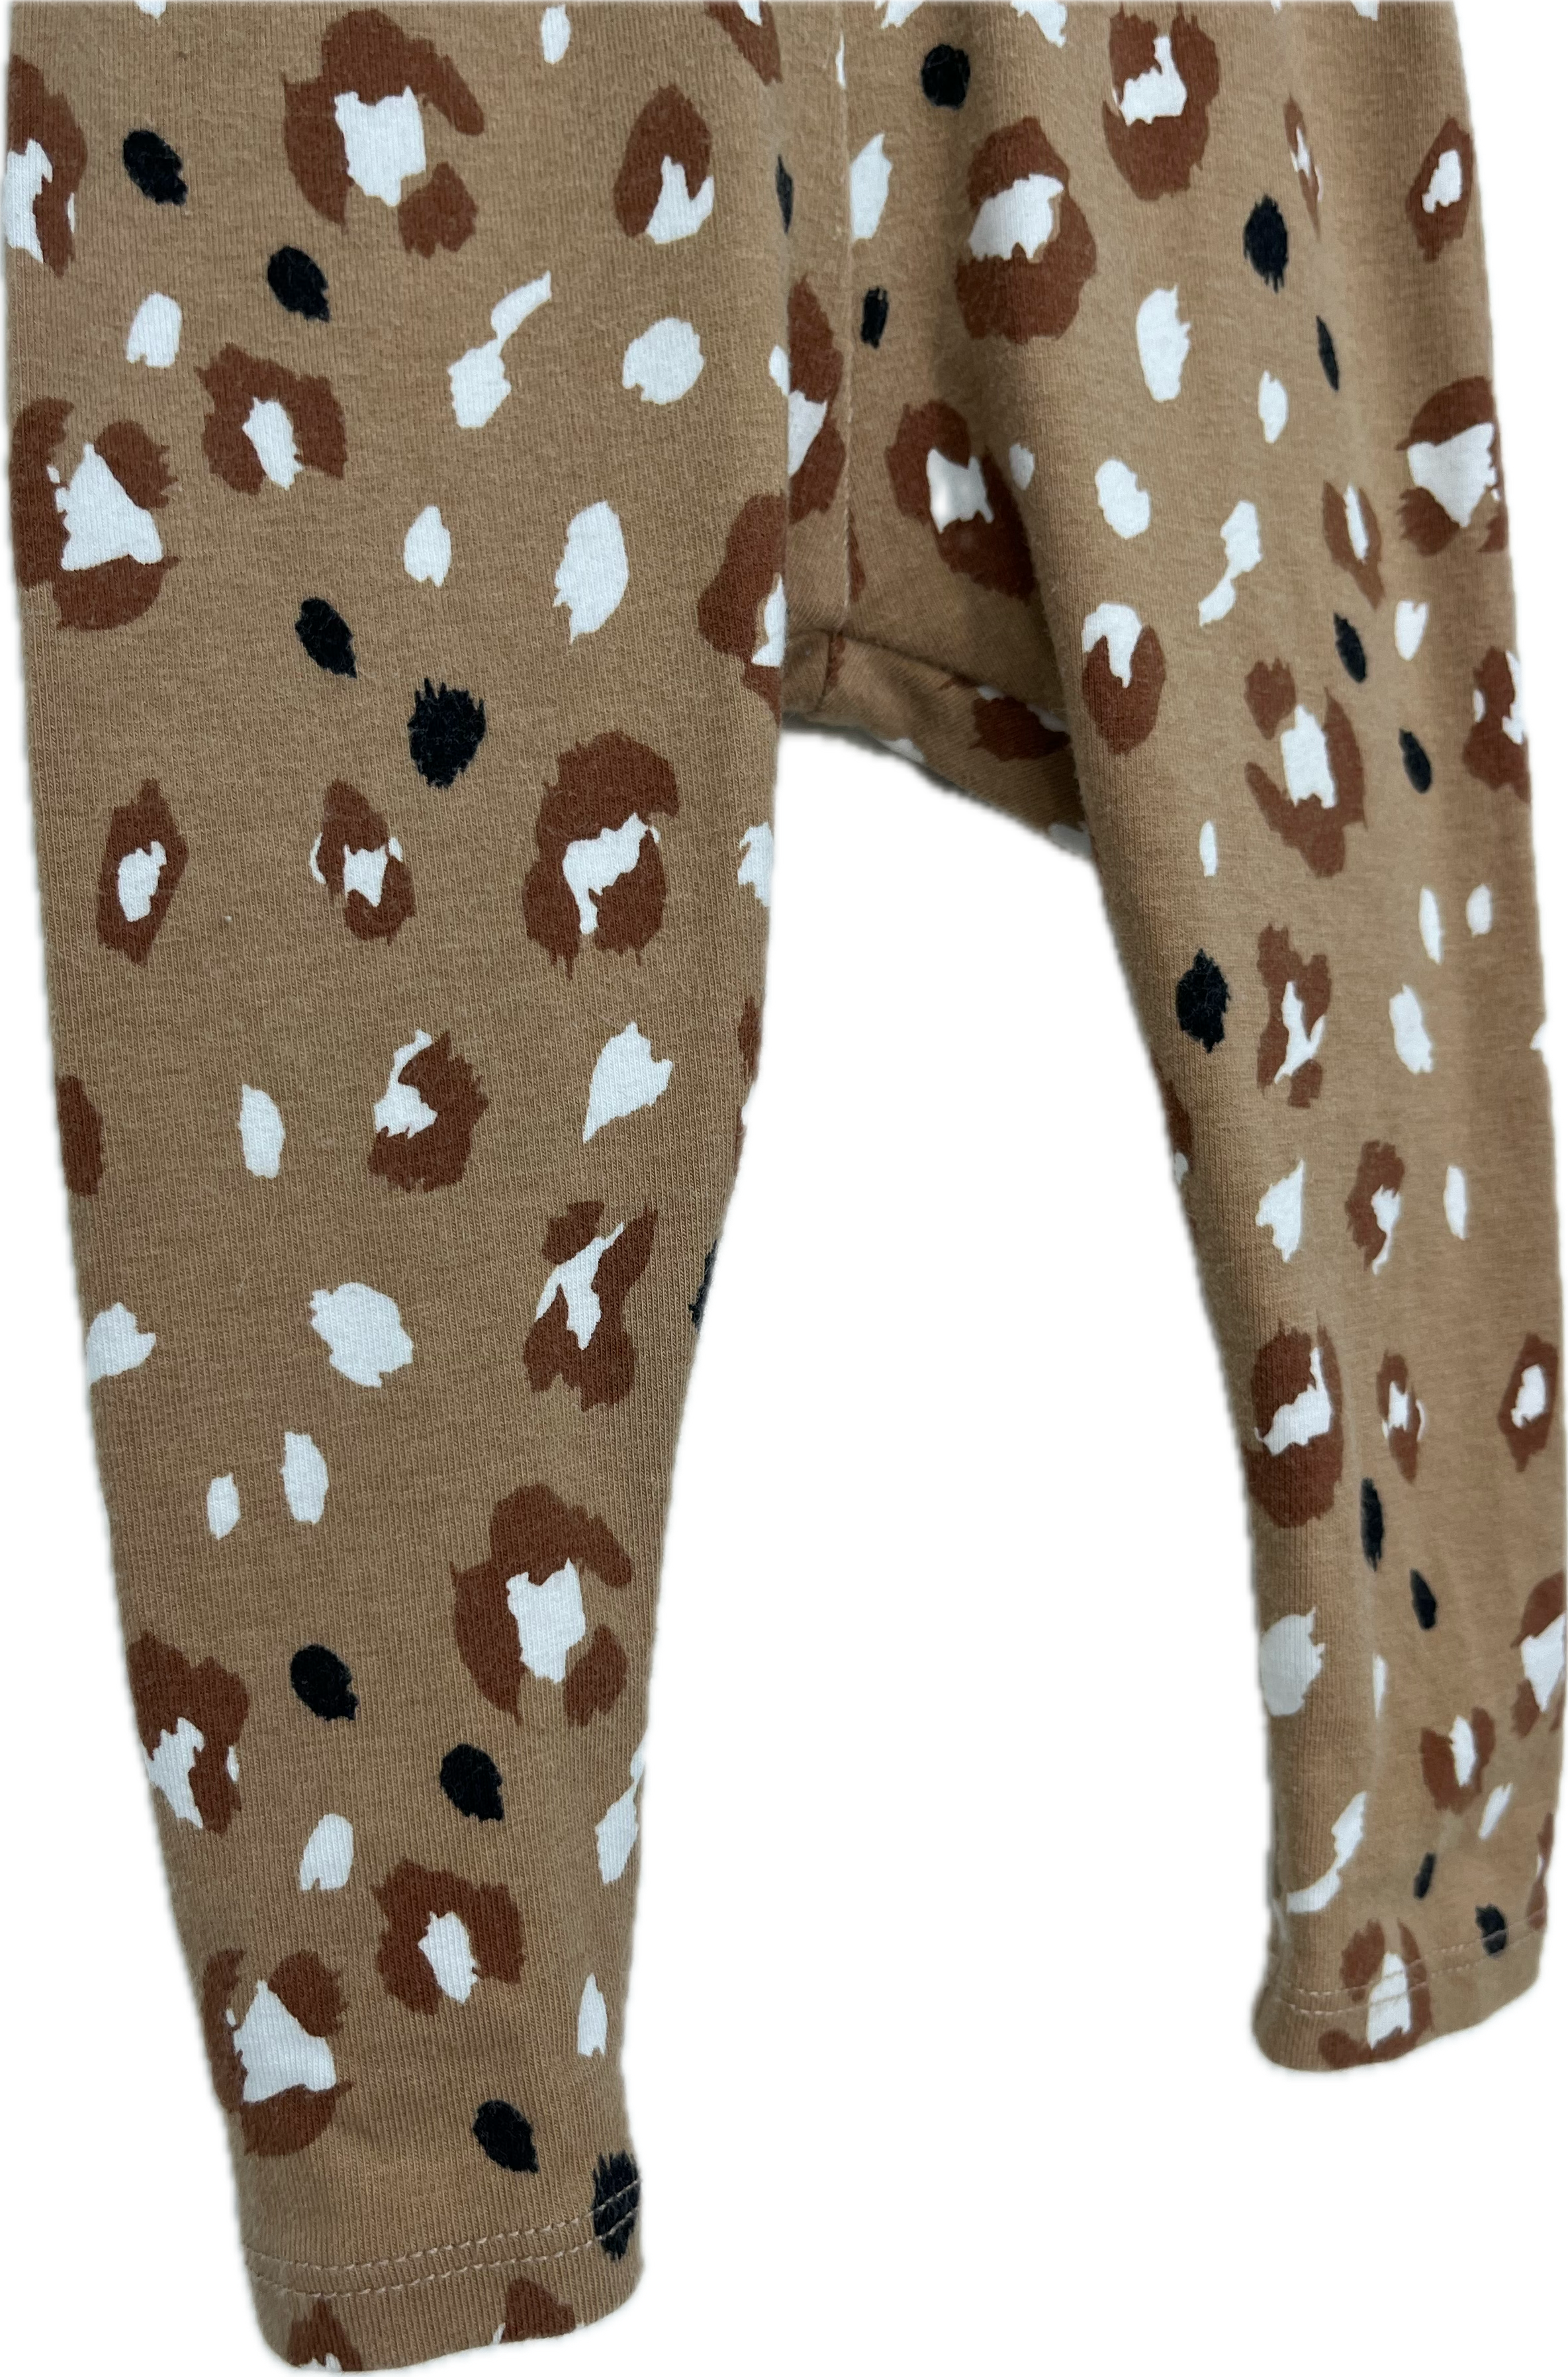 jax + lennon leopard leggings 0-3m